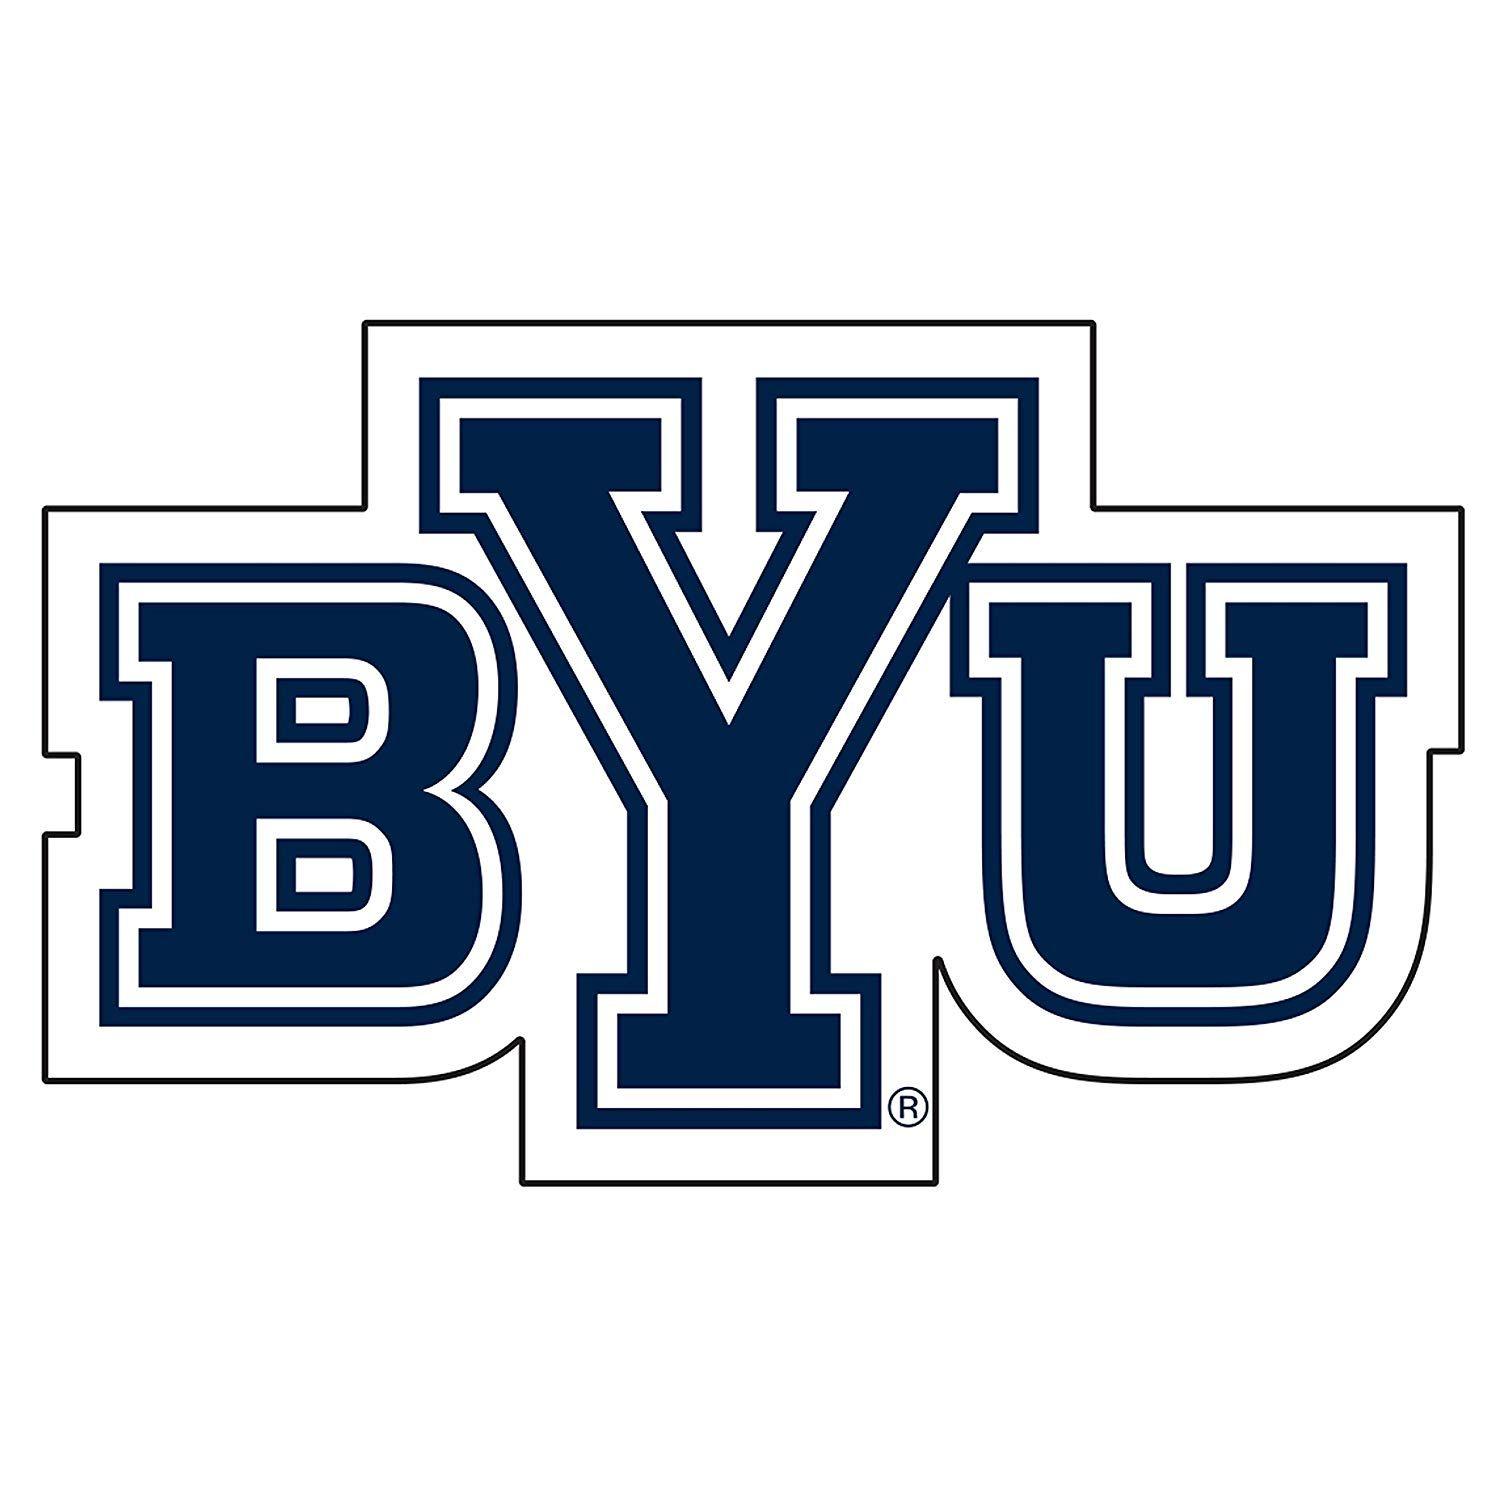 BYU Logo - Amazon.com : BYU Cougars Decal : Sports & Outdoors